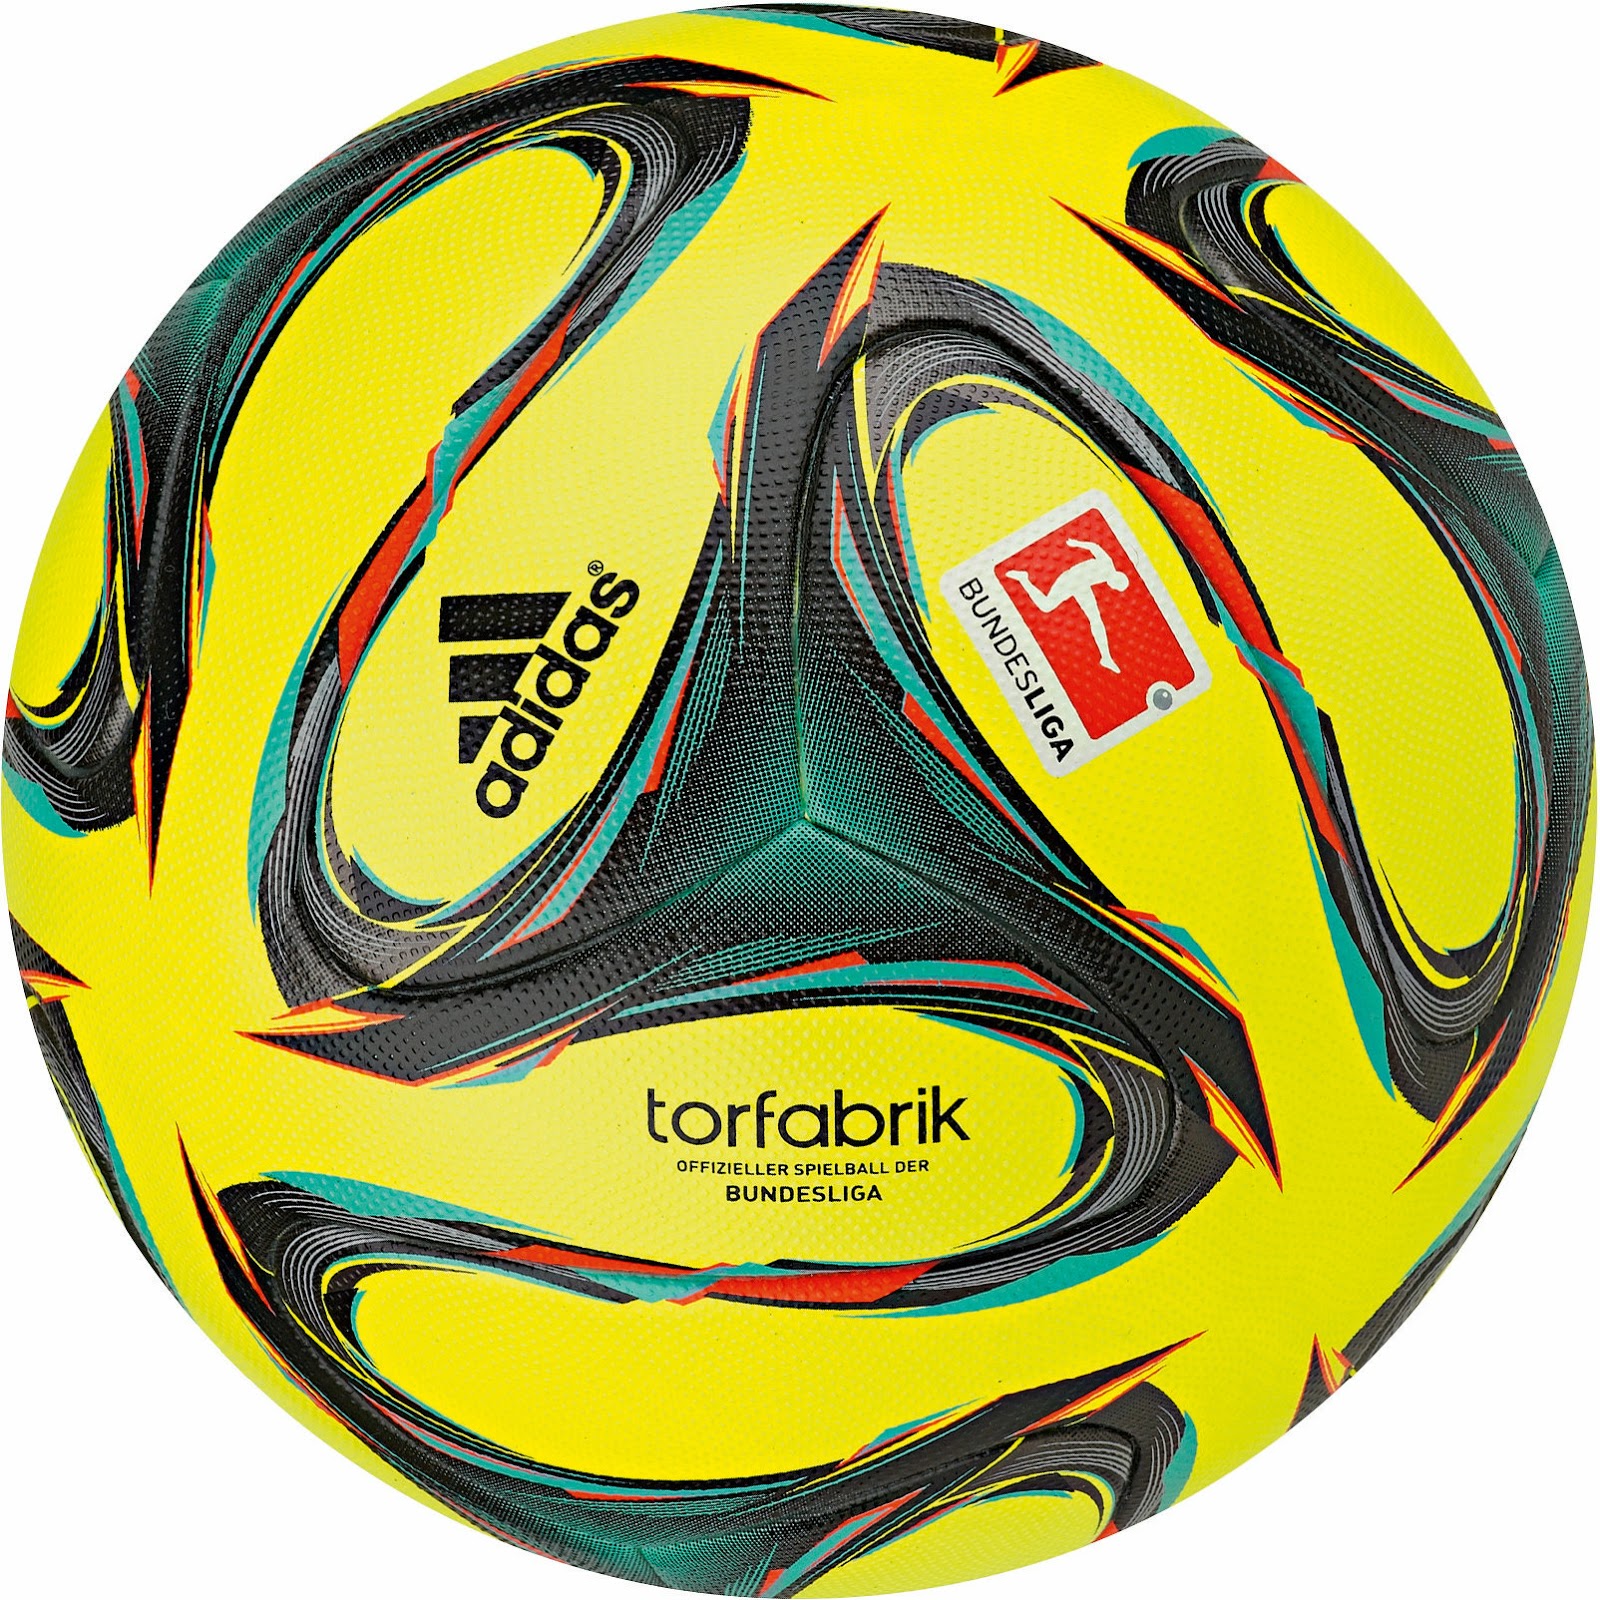 Torfabrik 14-15 Ball Released - Footy